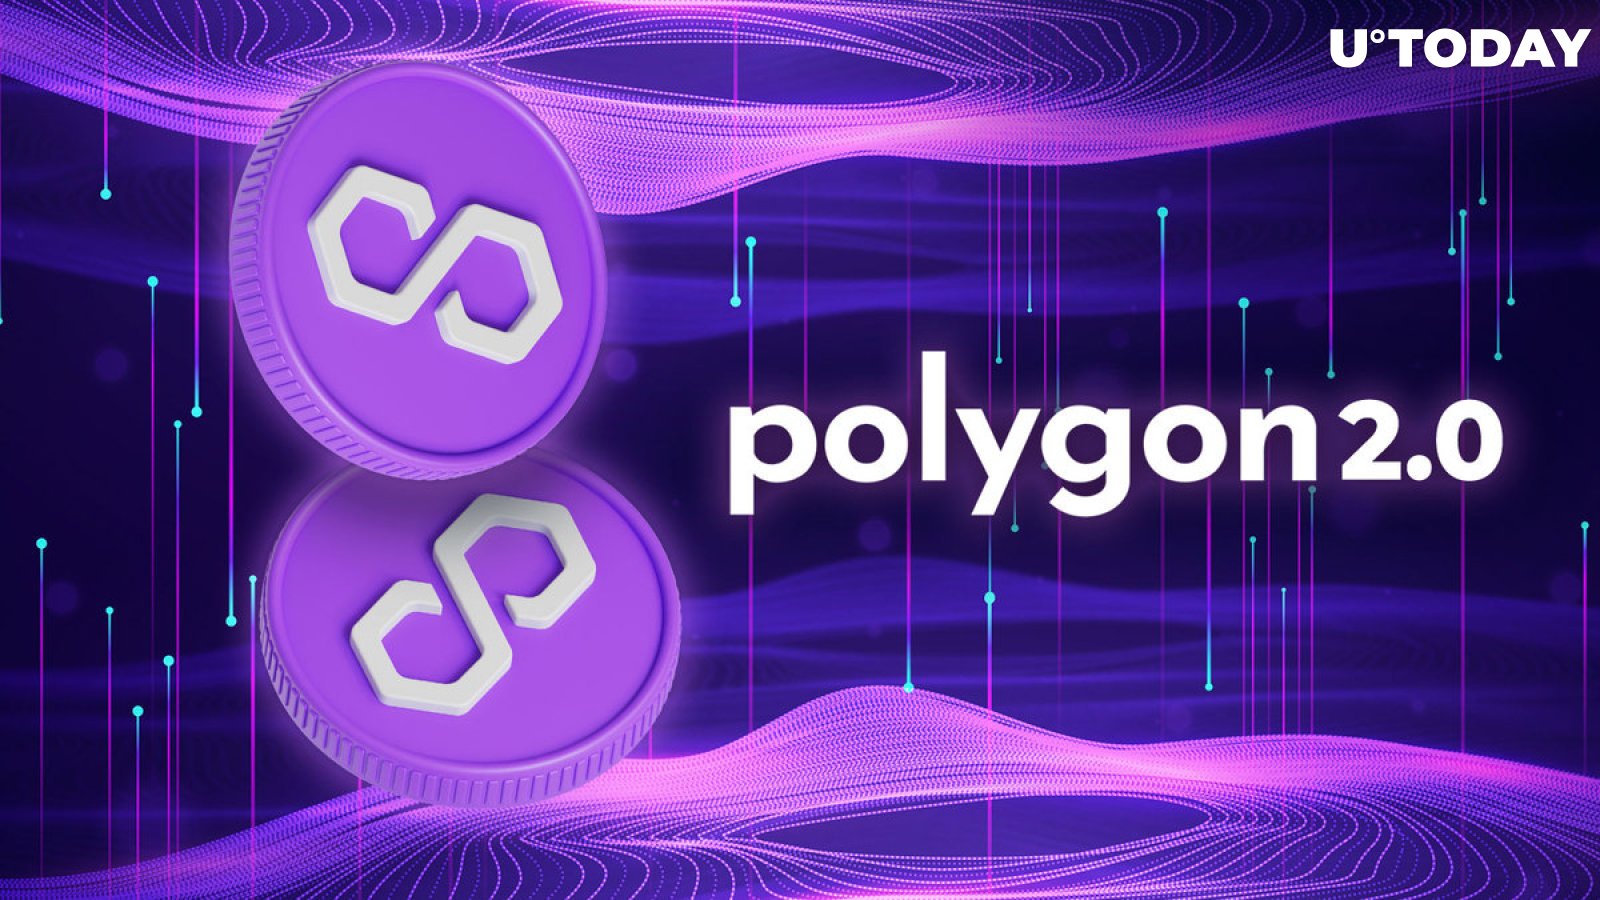 Polygon (MATIC) Takes Giant Step Forward to Polygon 2.0